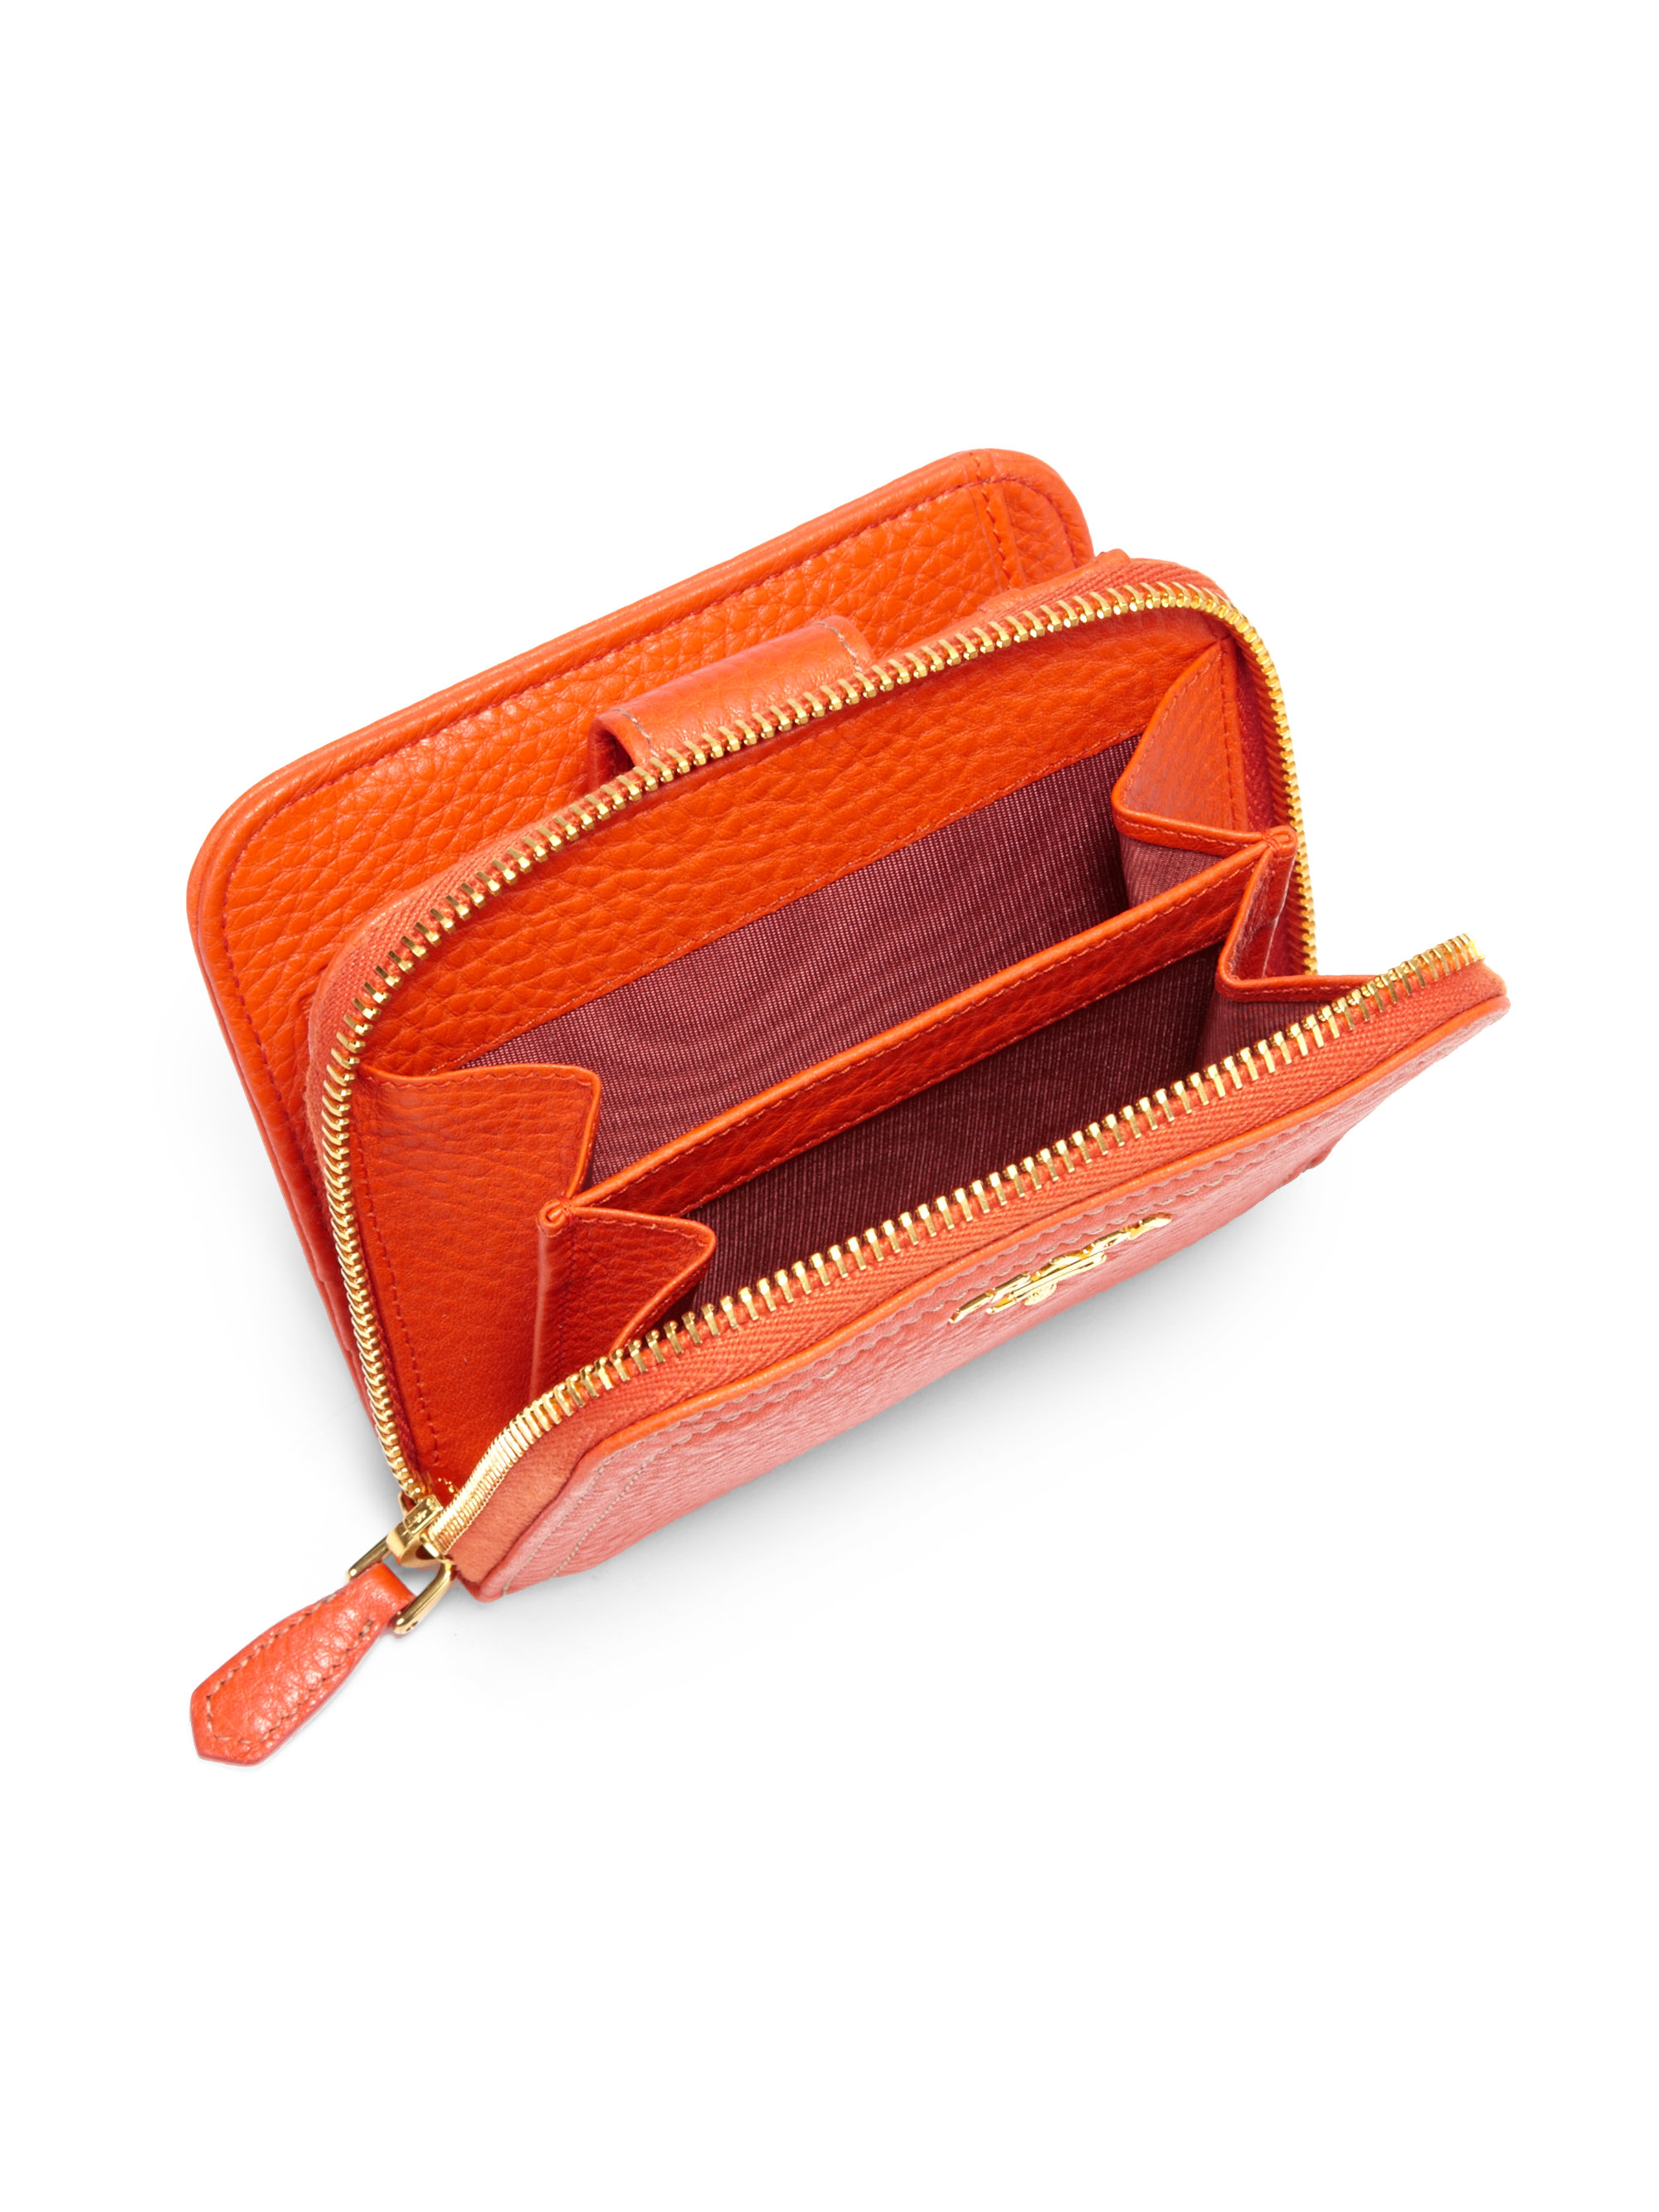 Prada Daino Small Zip Around Leather Wallet in Orange (PAPAYA) | Lyst  